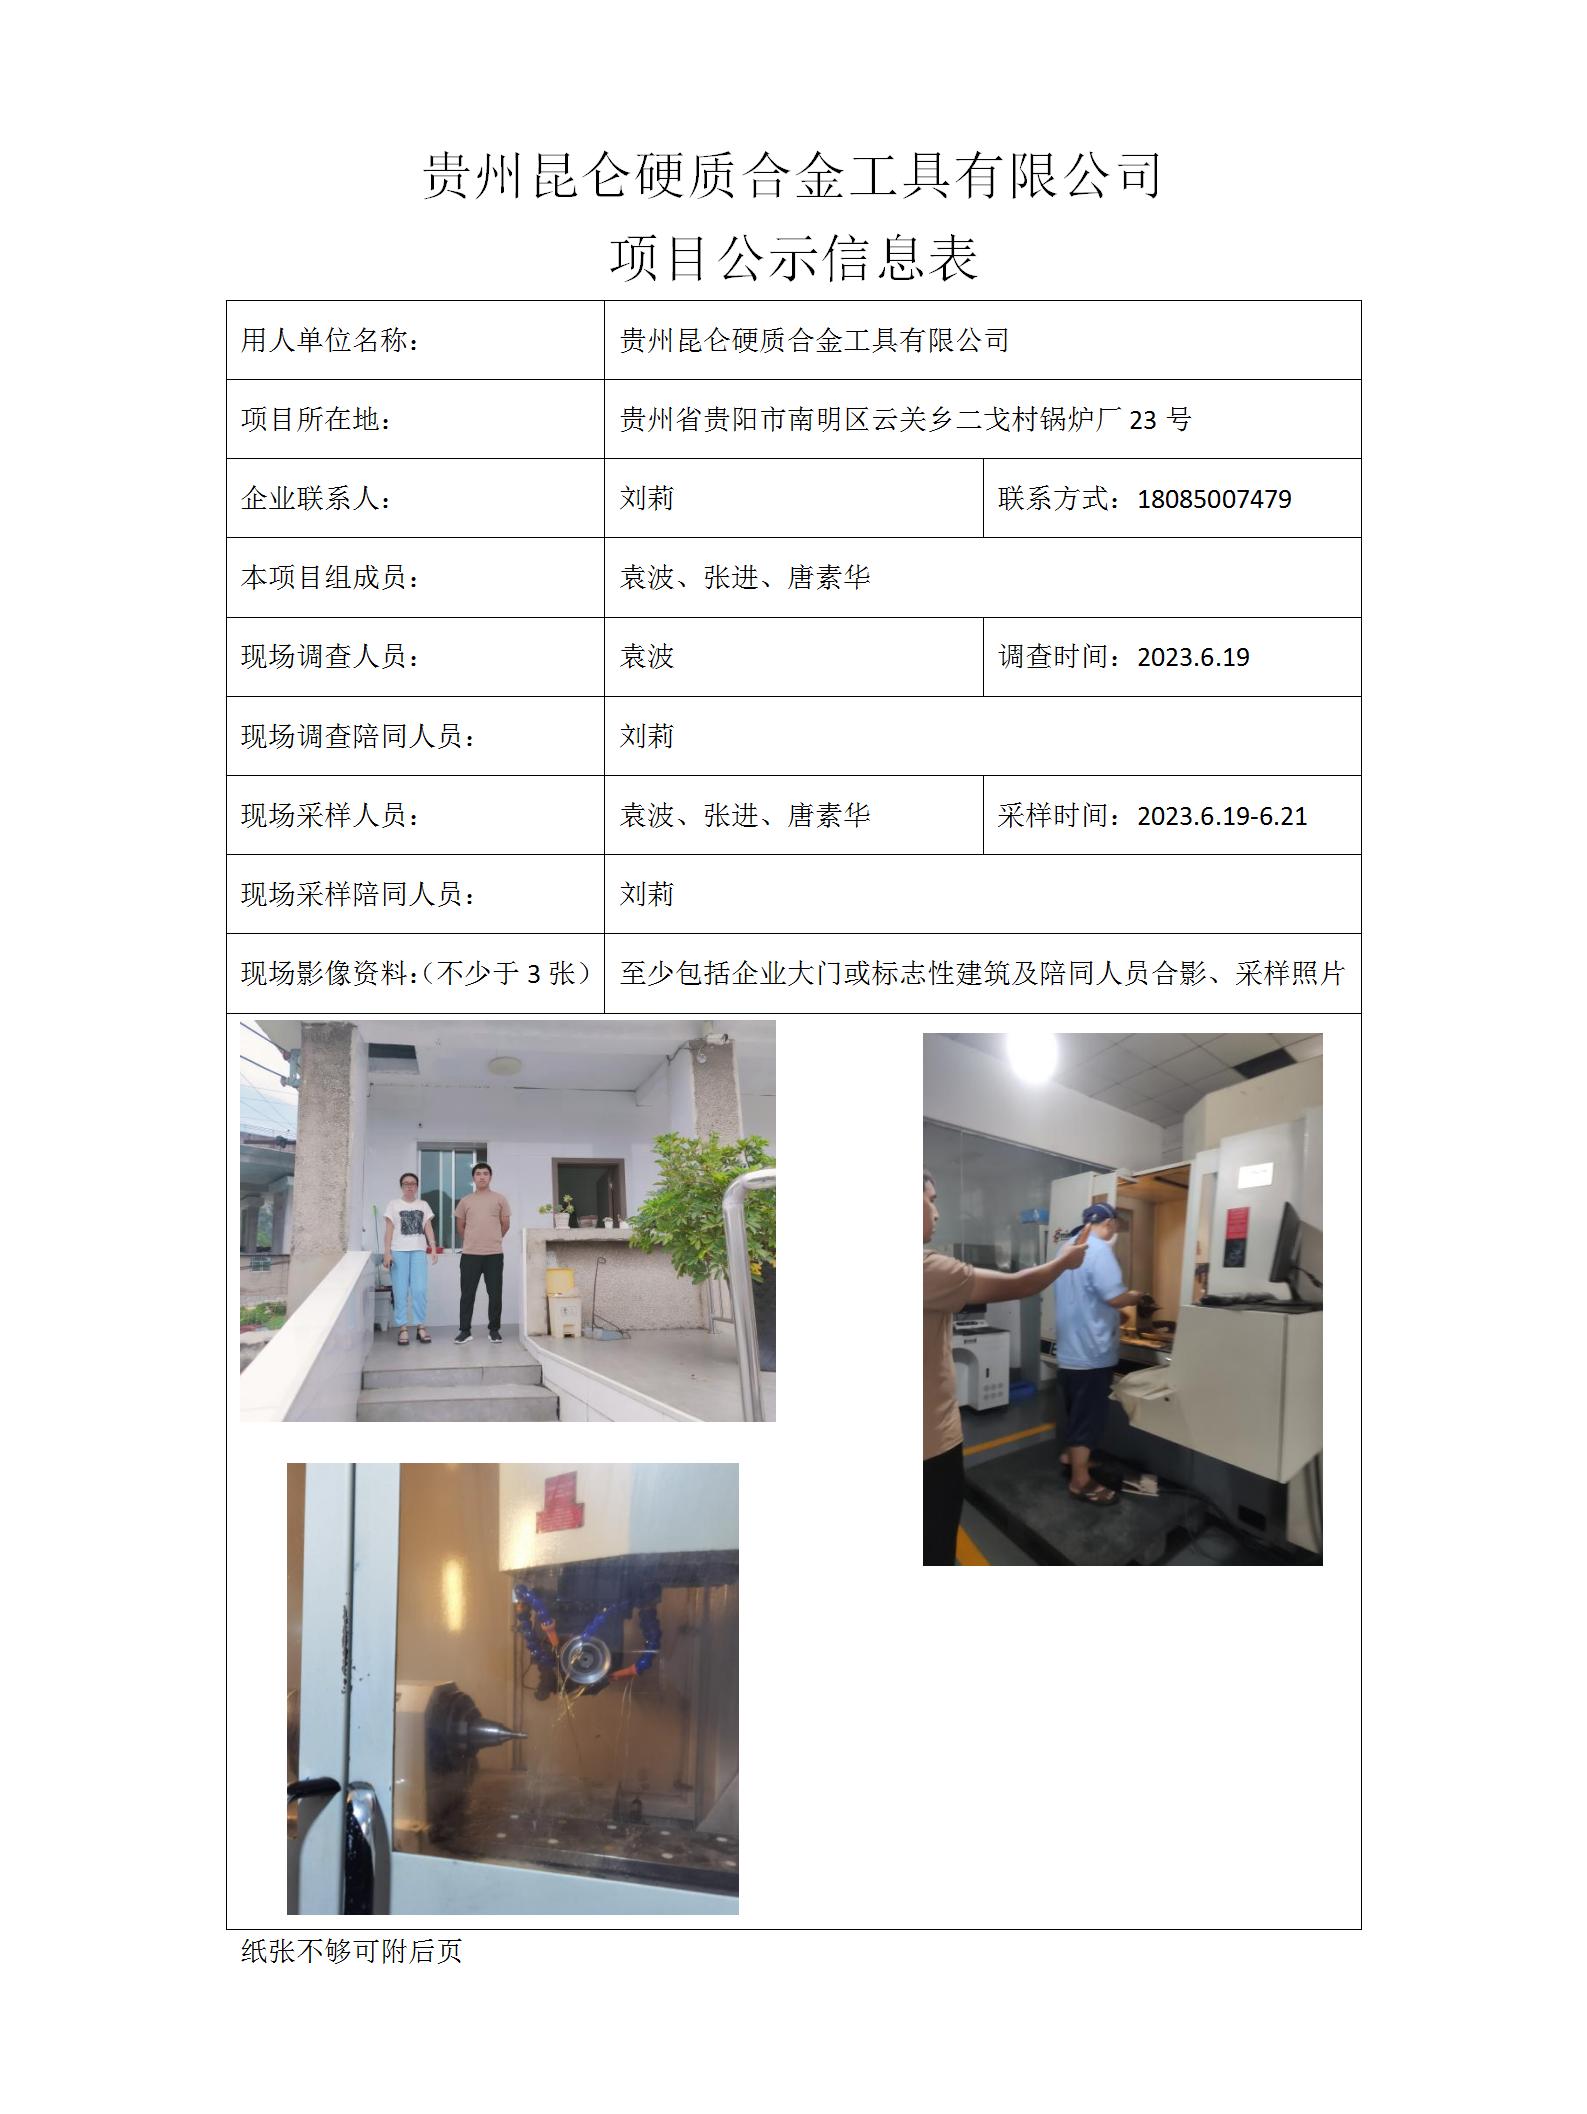 MD2023-0133（XP）贵州昆仑硬质合金工具有限公司项目公示信息表_01.jpg